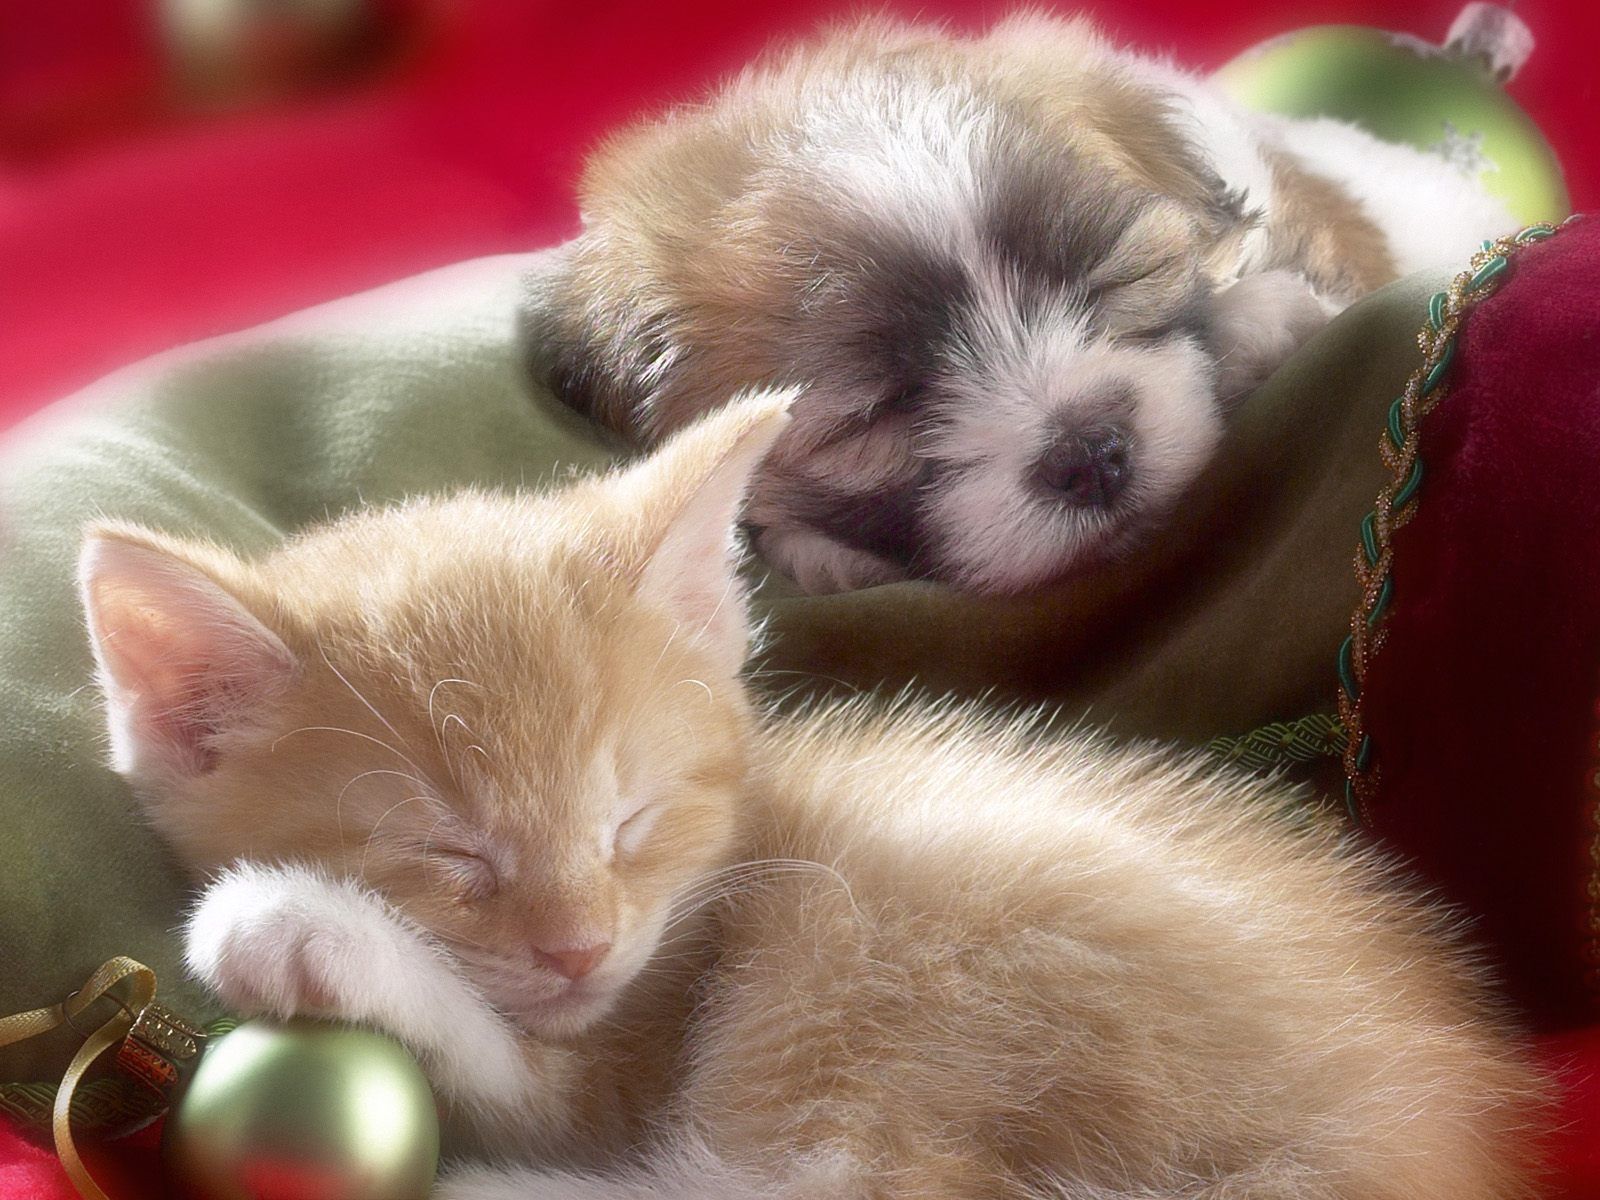 Kitten and Puppy - Kittens Wallpaper (12929278) - Fanpop